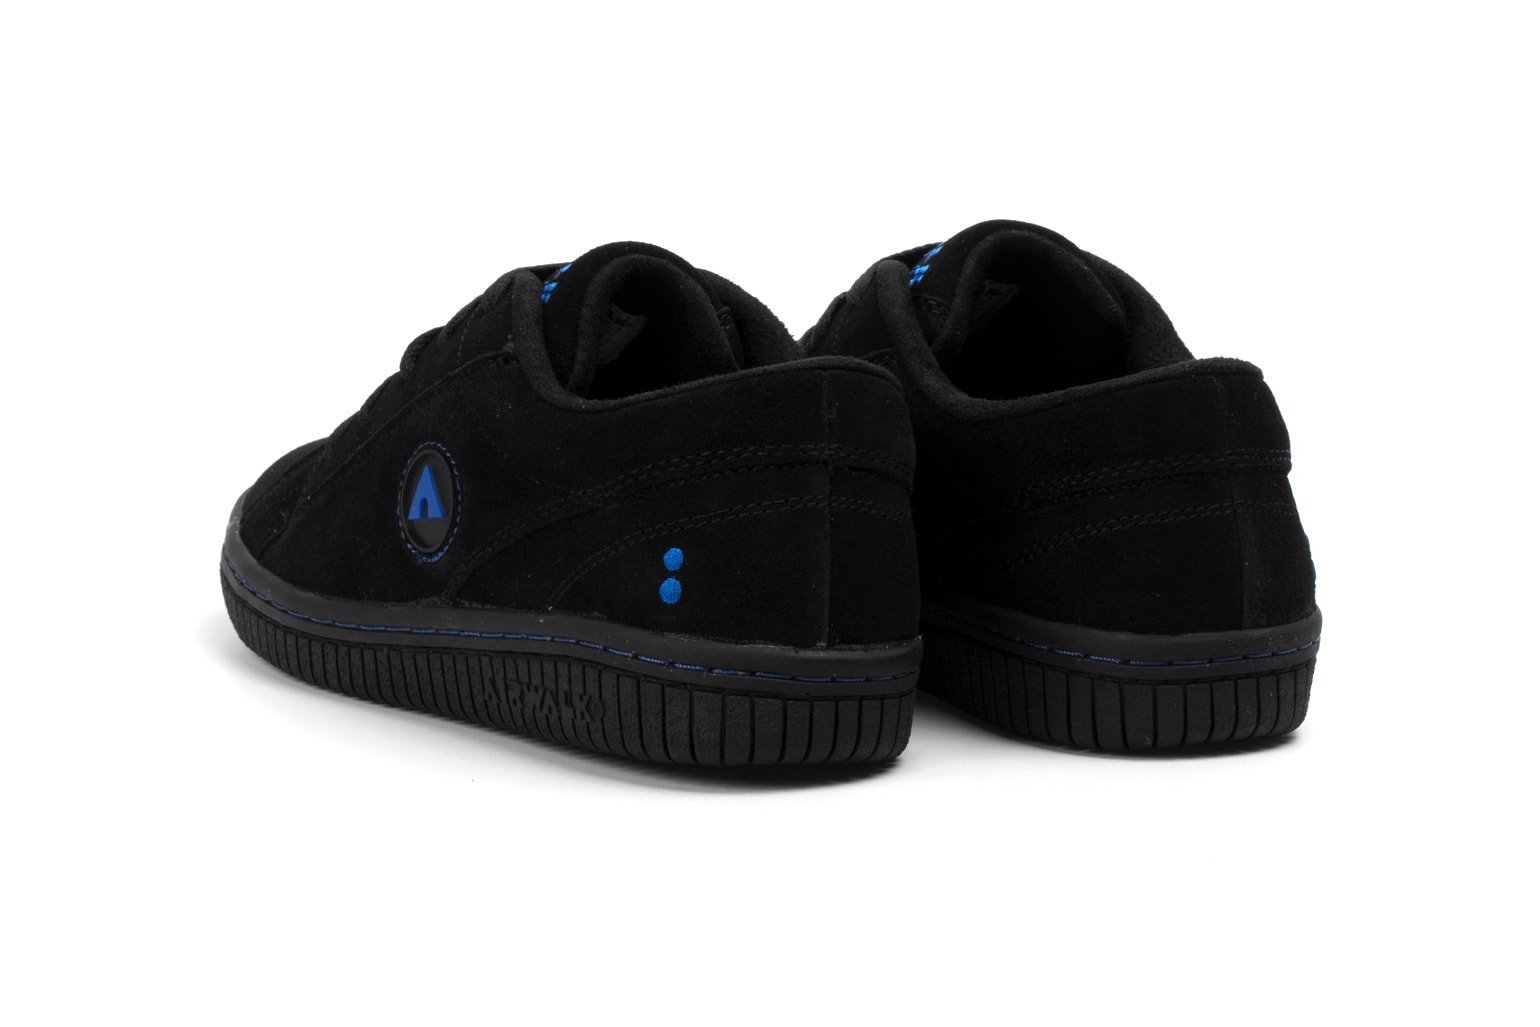 colette Airwalk The One Black Blue Sneakers Shoes Footwear 2017 July Summer Release